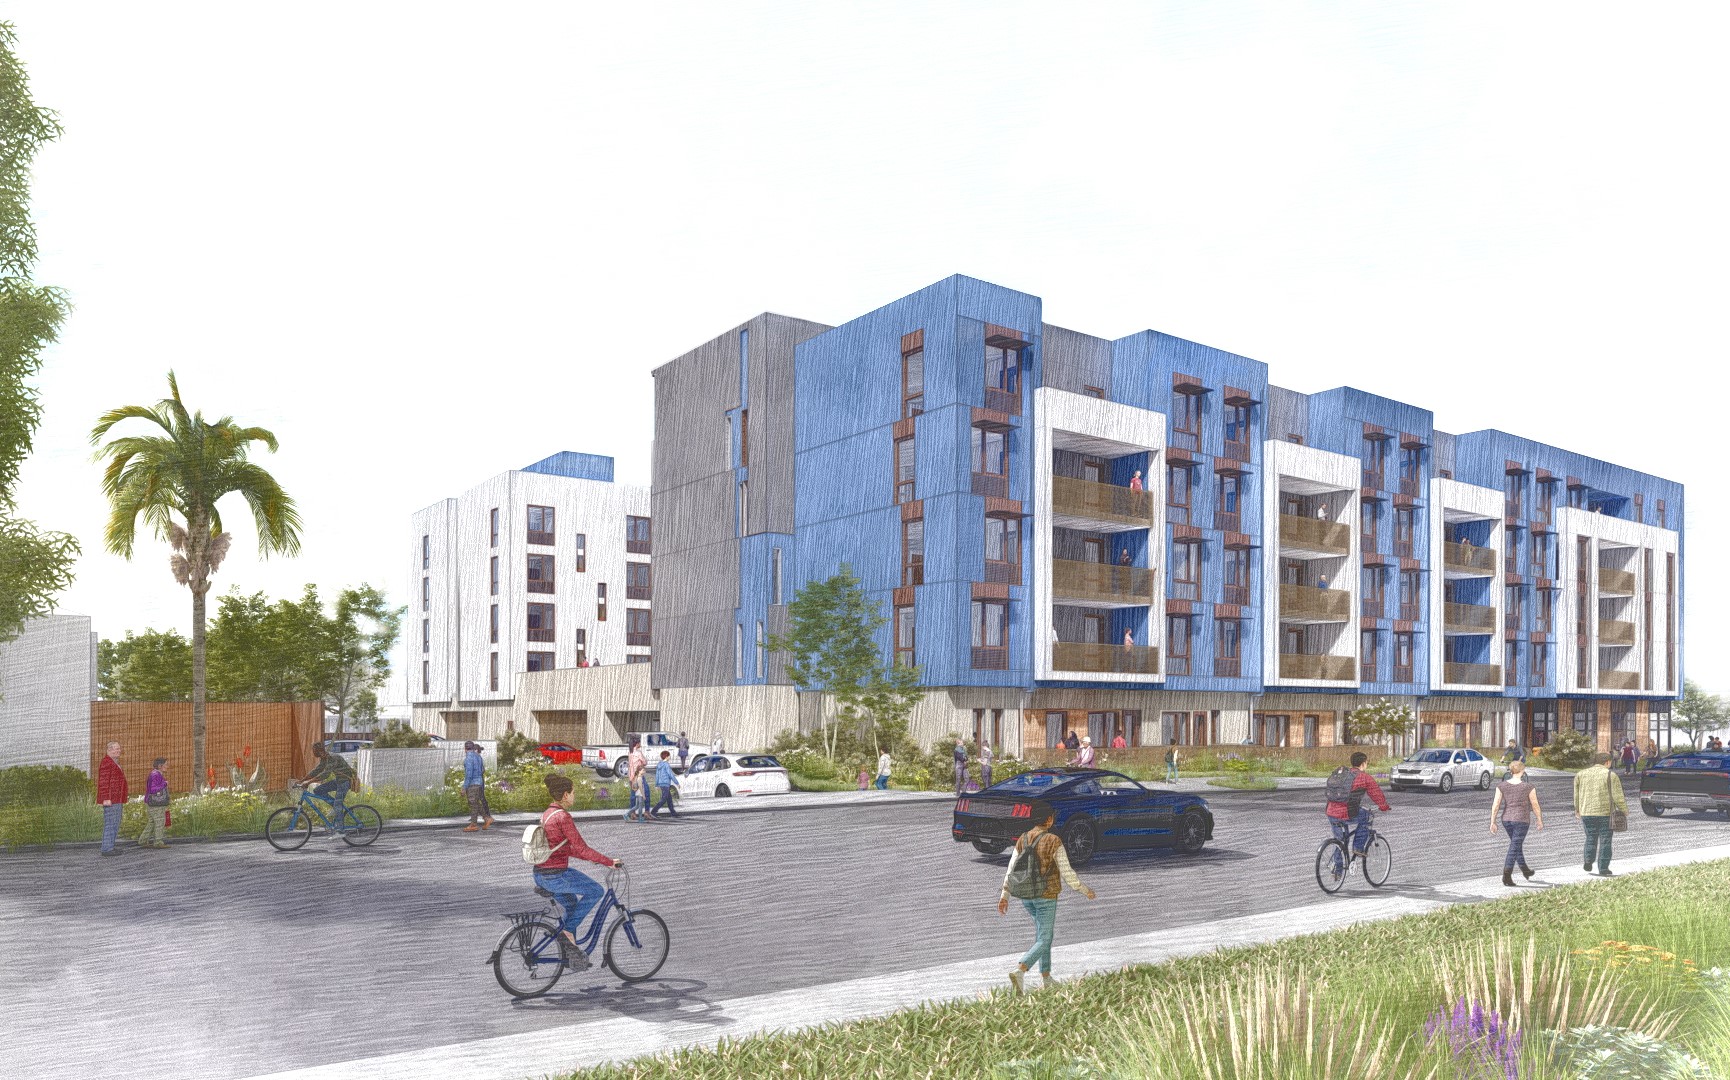 Artist's rendering of Civic Center Multifamily Housing Development in Santa Clara.